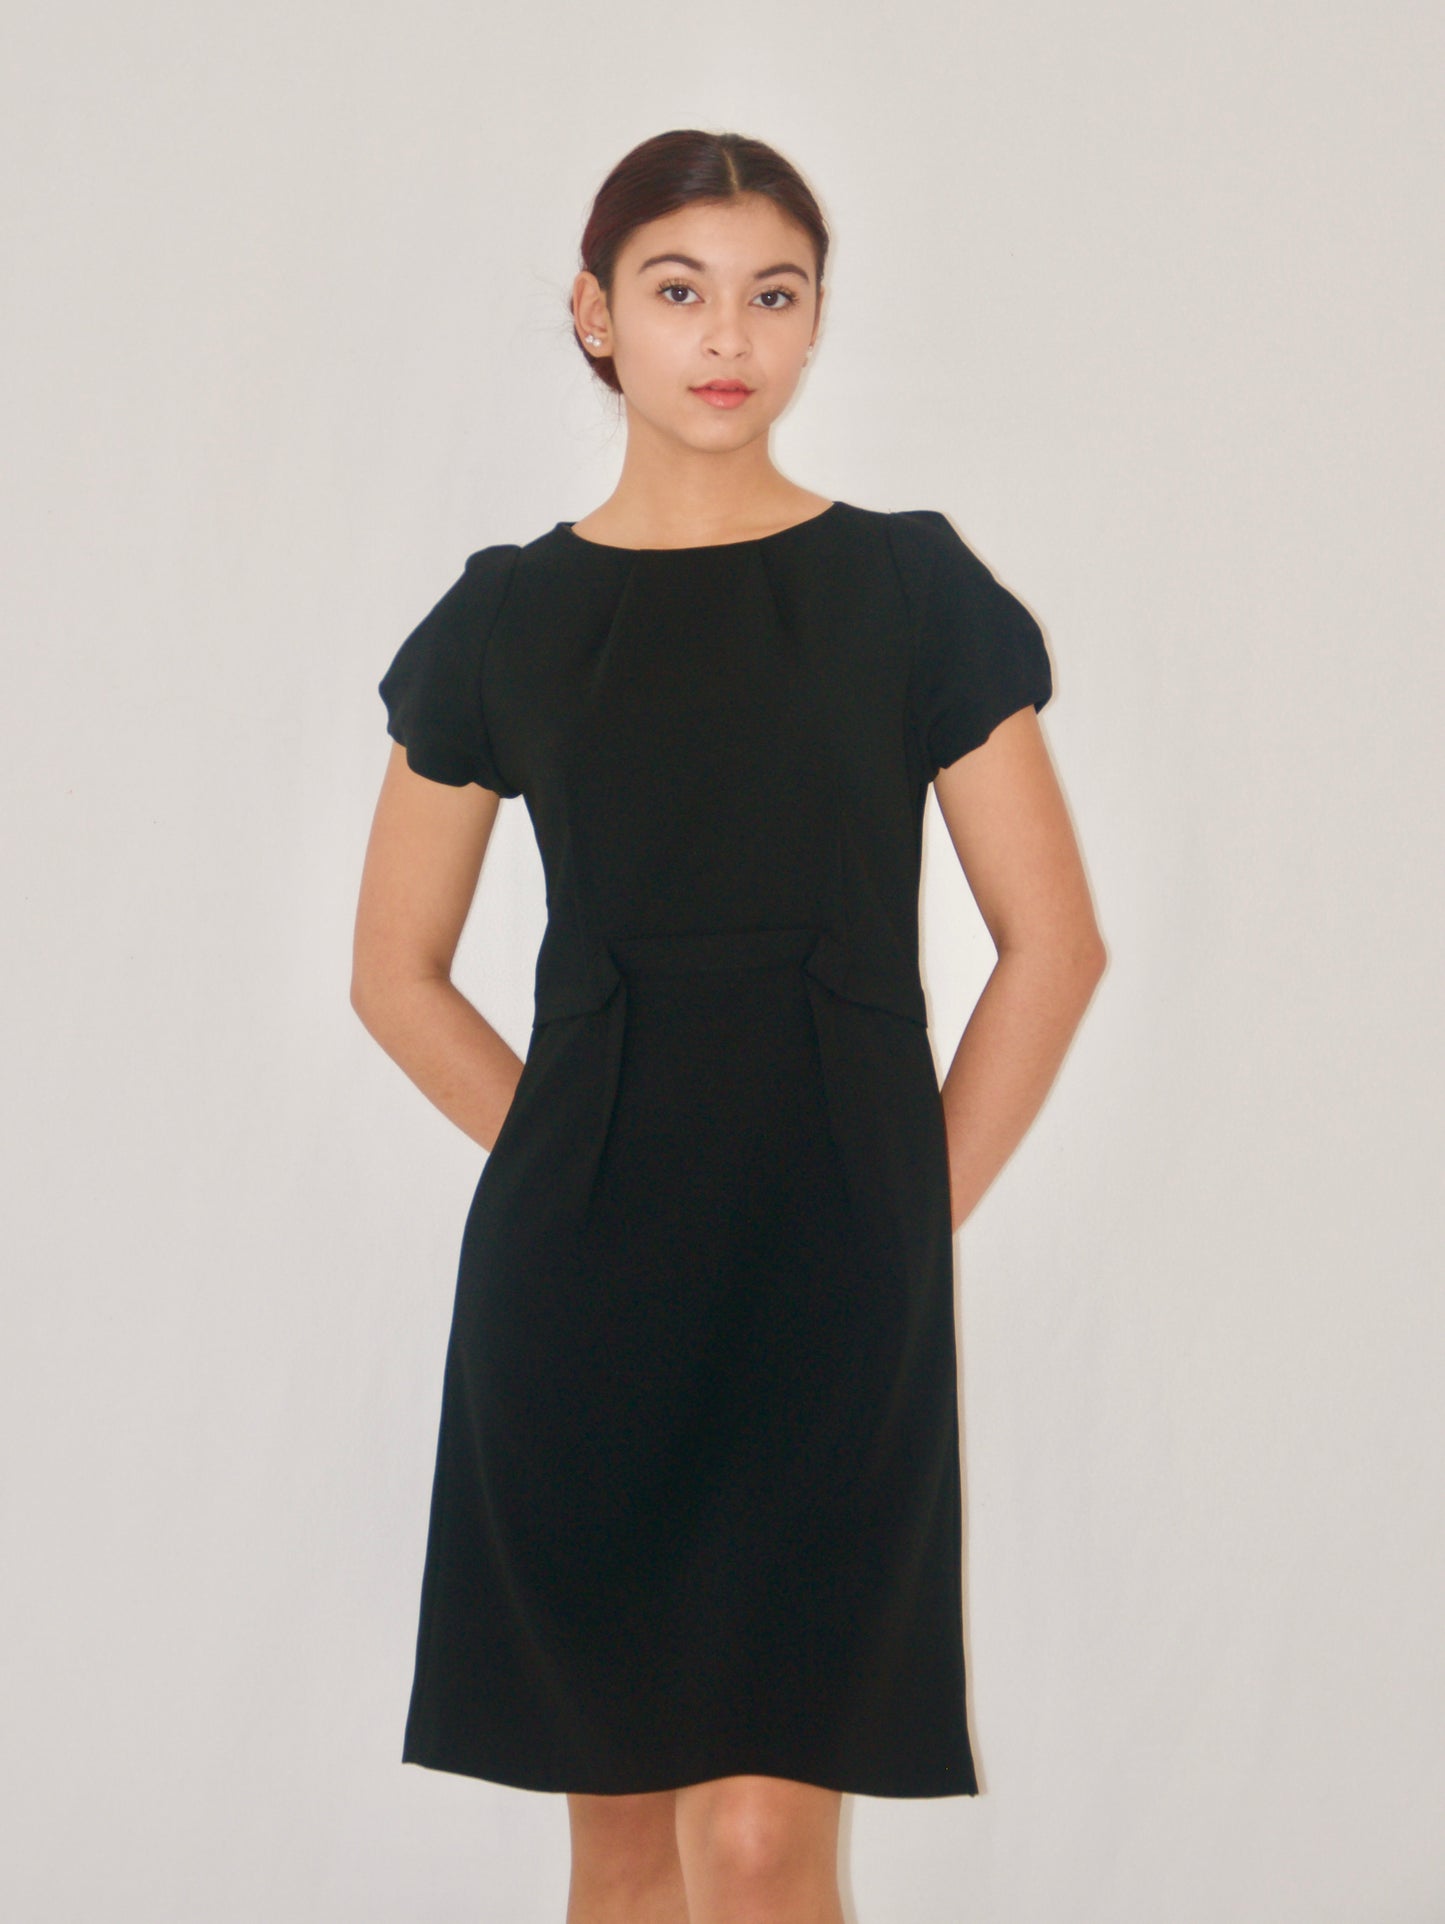 Black Short Cap Sleeve A-Line Dress